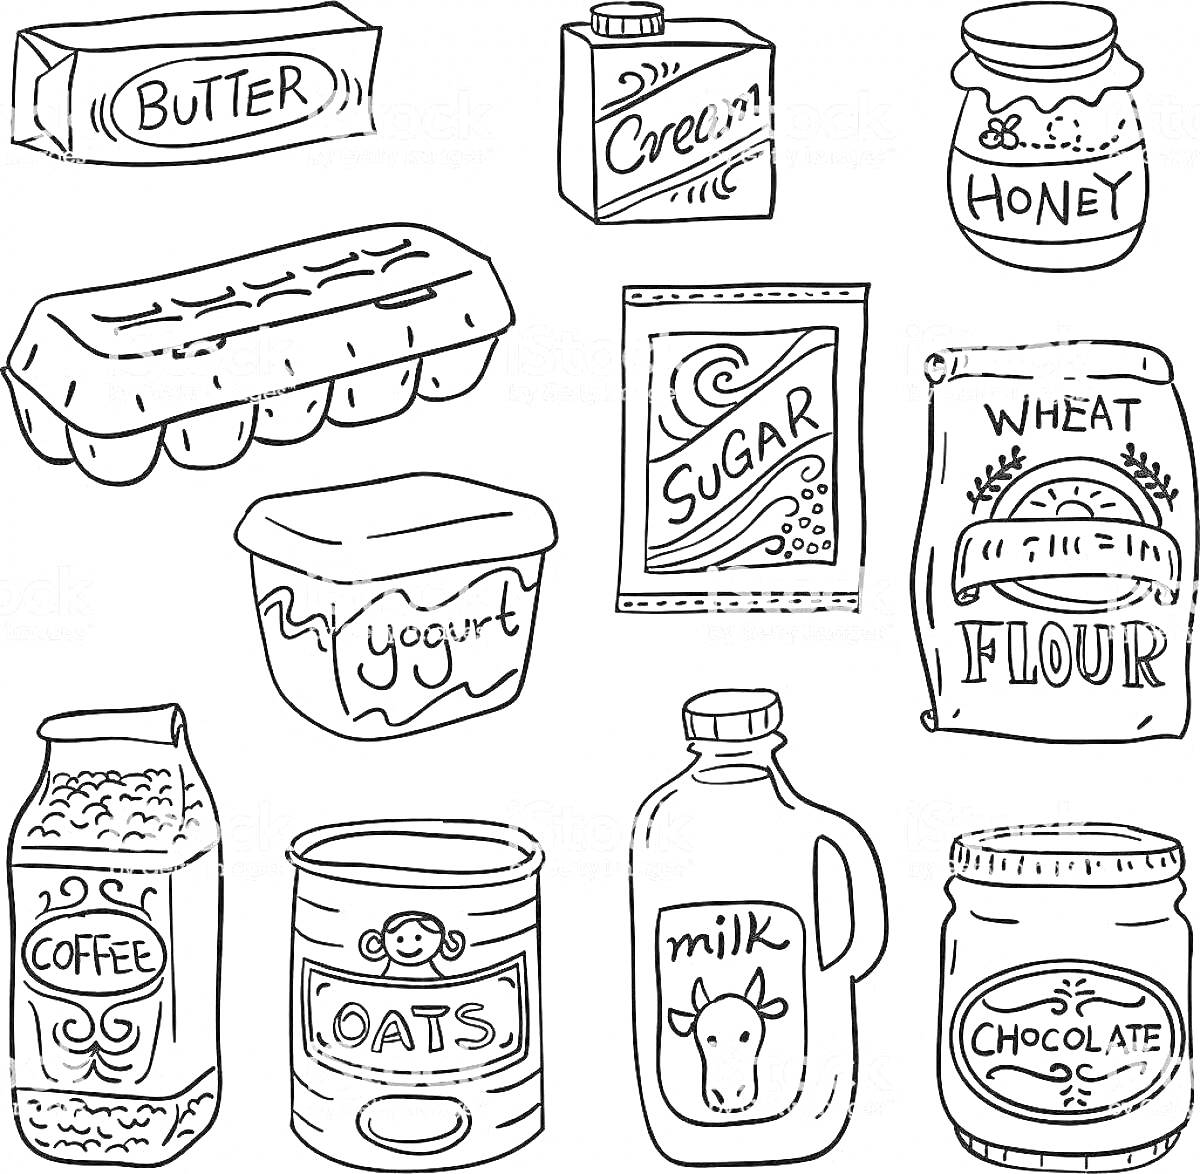 На раскраске изображено: Масло, Сливки, Мёд, Яйца, Сахар, Мука, Йогурт, Кофе, Молоко, Продукты, Кухня